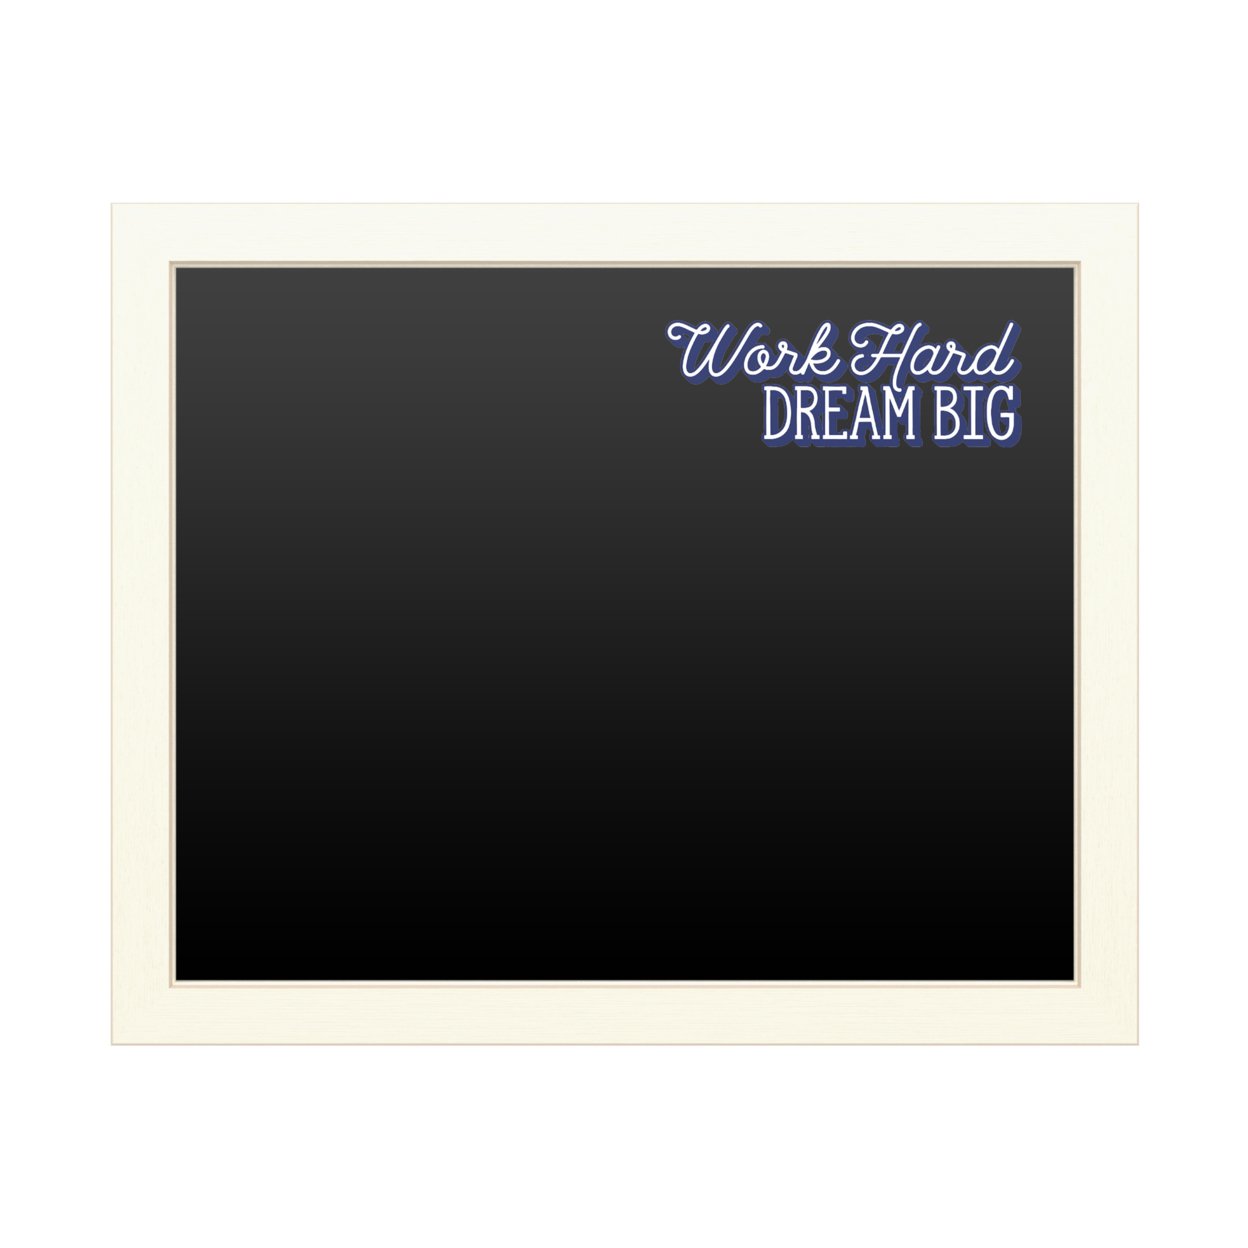 16 X 20 Chalk Board With Printed Artwork - Work Hard Dream Big Blue White Board - Ready To Hang Chalkboard